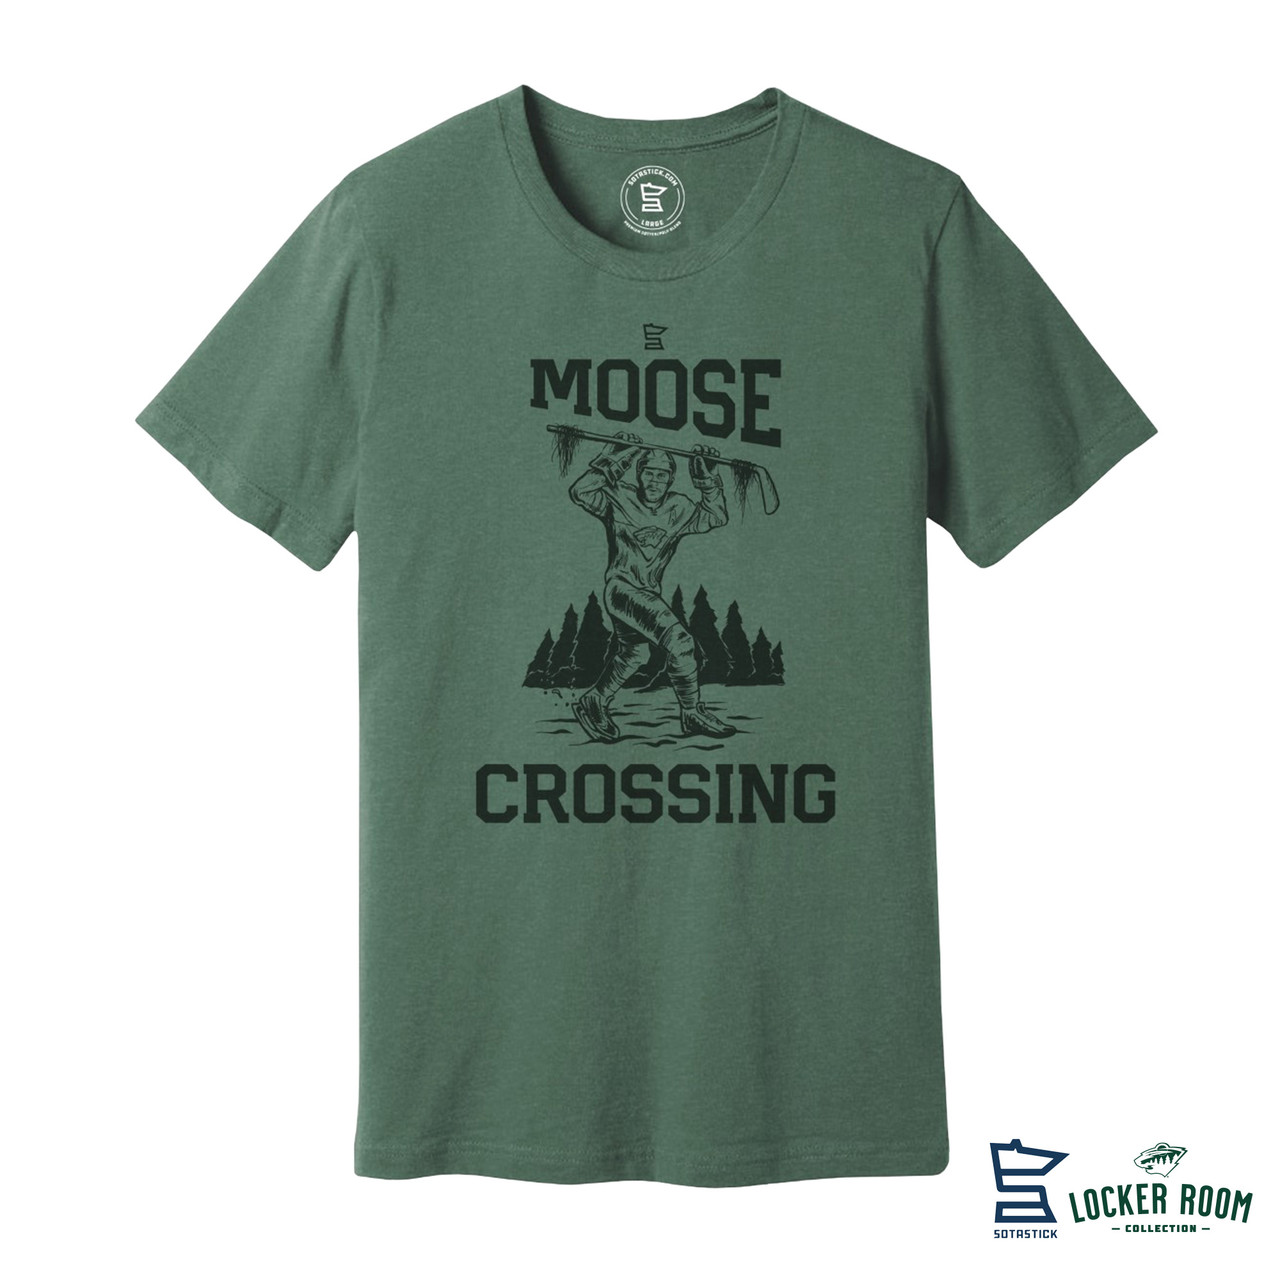 SotaStick - MOOSE CROSSING! Our latest locker room shirt